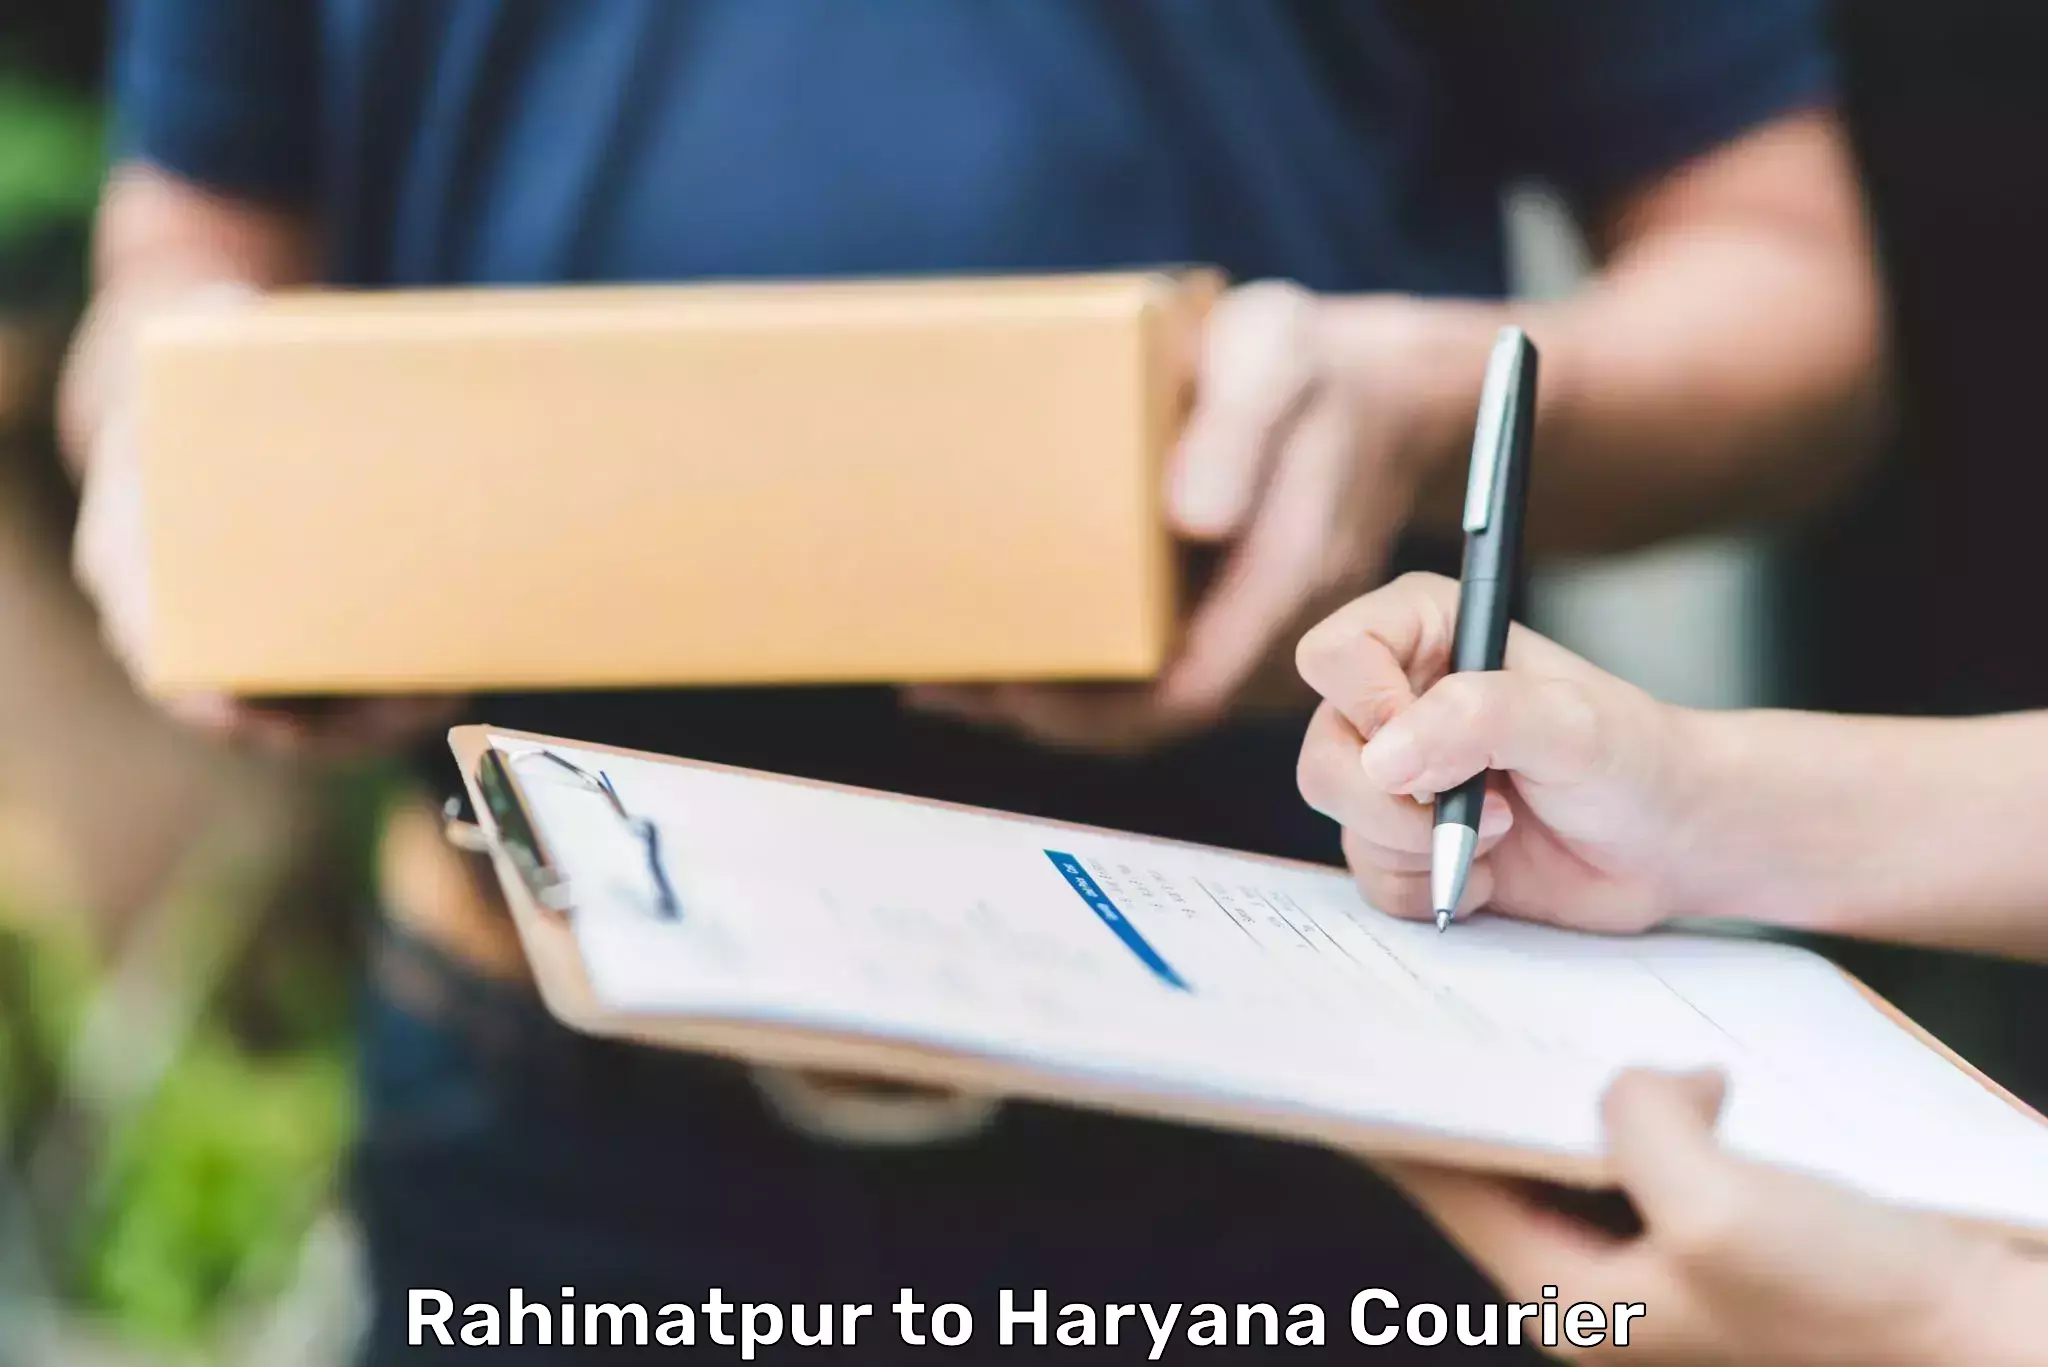 Bulk courier orders Rahimatpur to Chaudhary Charan Singh Haryana Agricultural University Hisar